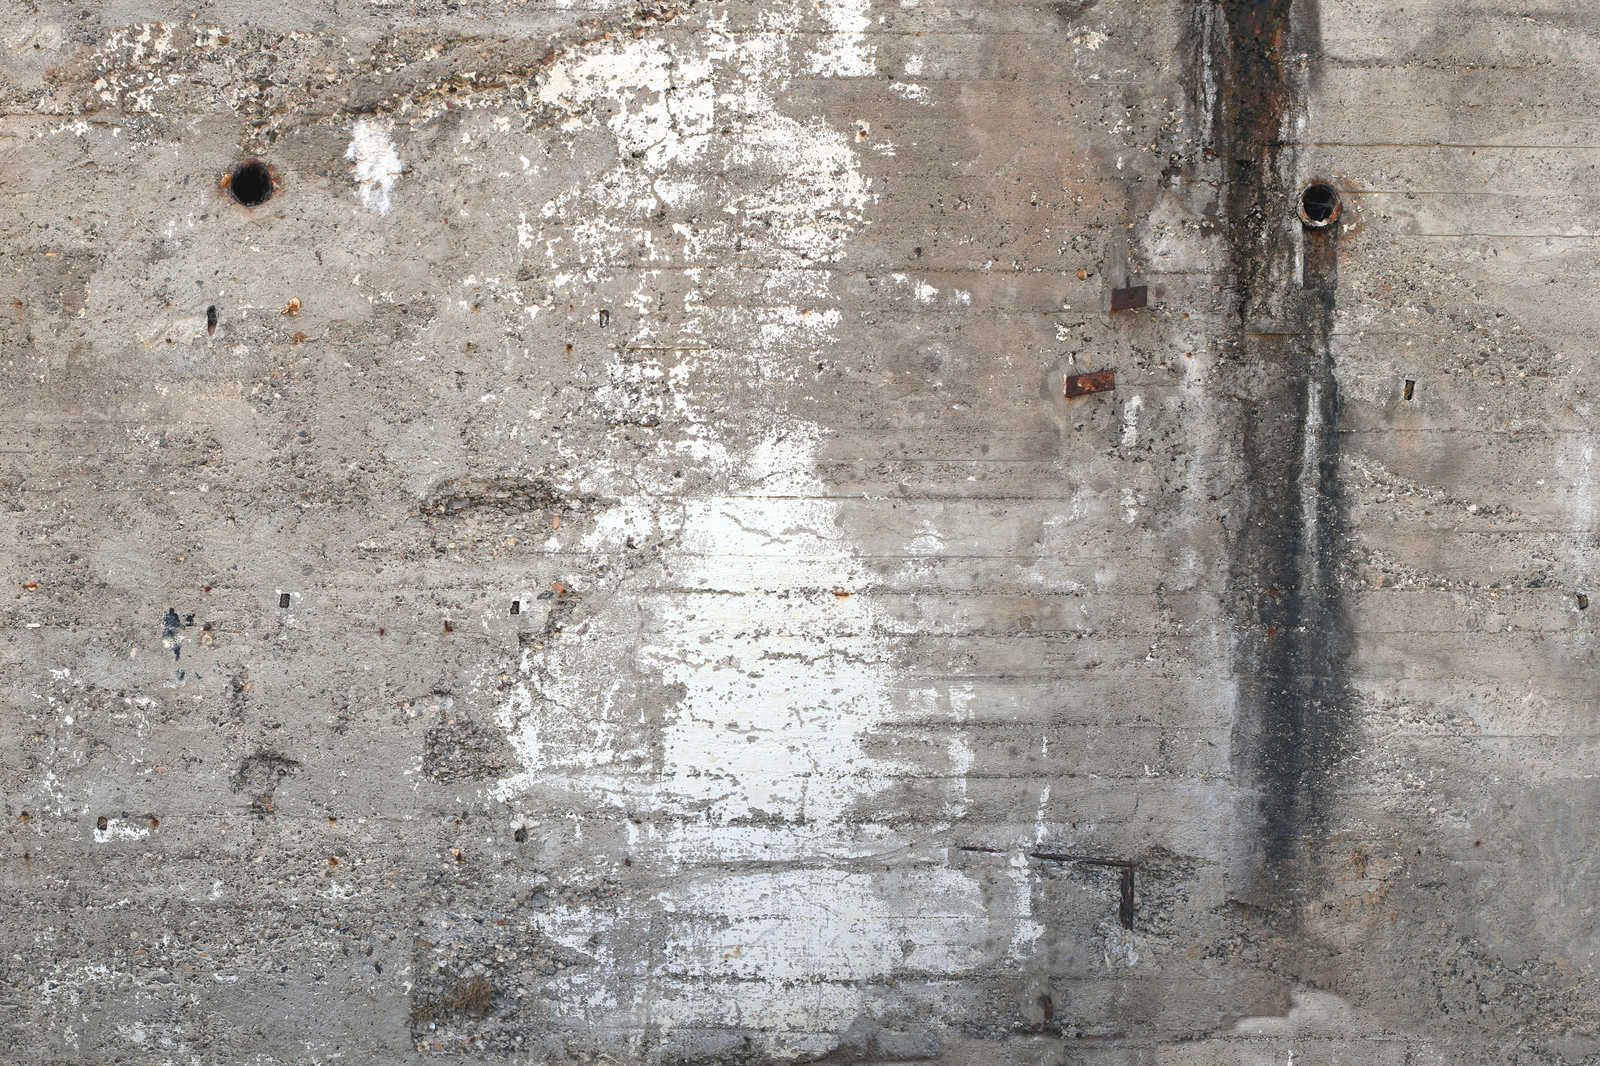             Lienzo Pared concreto Pintura Estilo Industrial Rústico - 0.90 m x 0.60 m
        